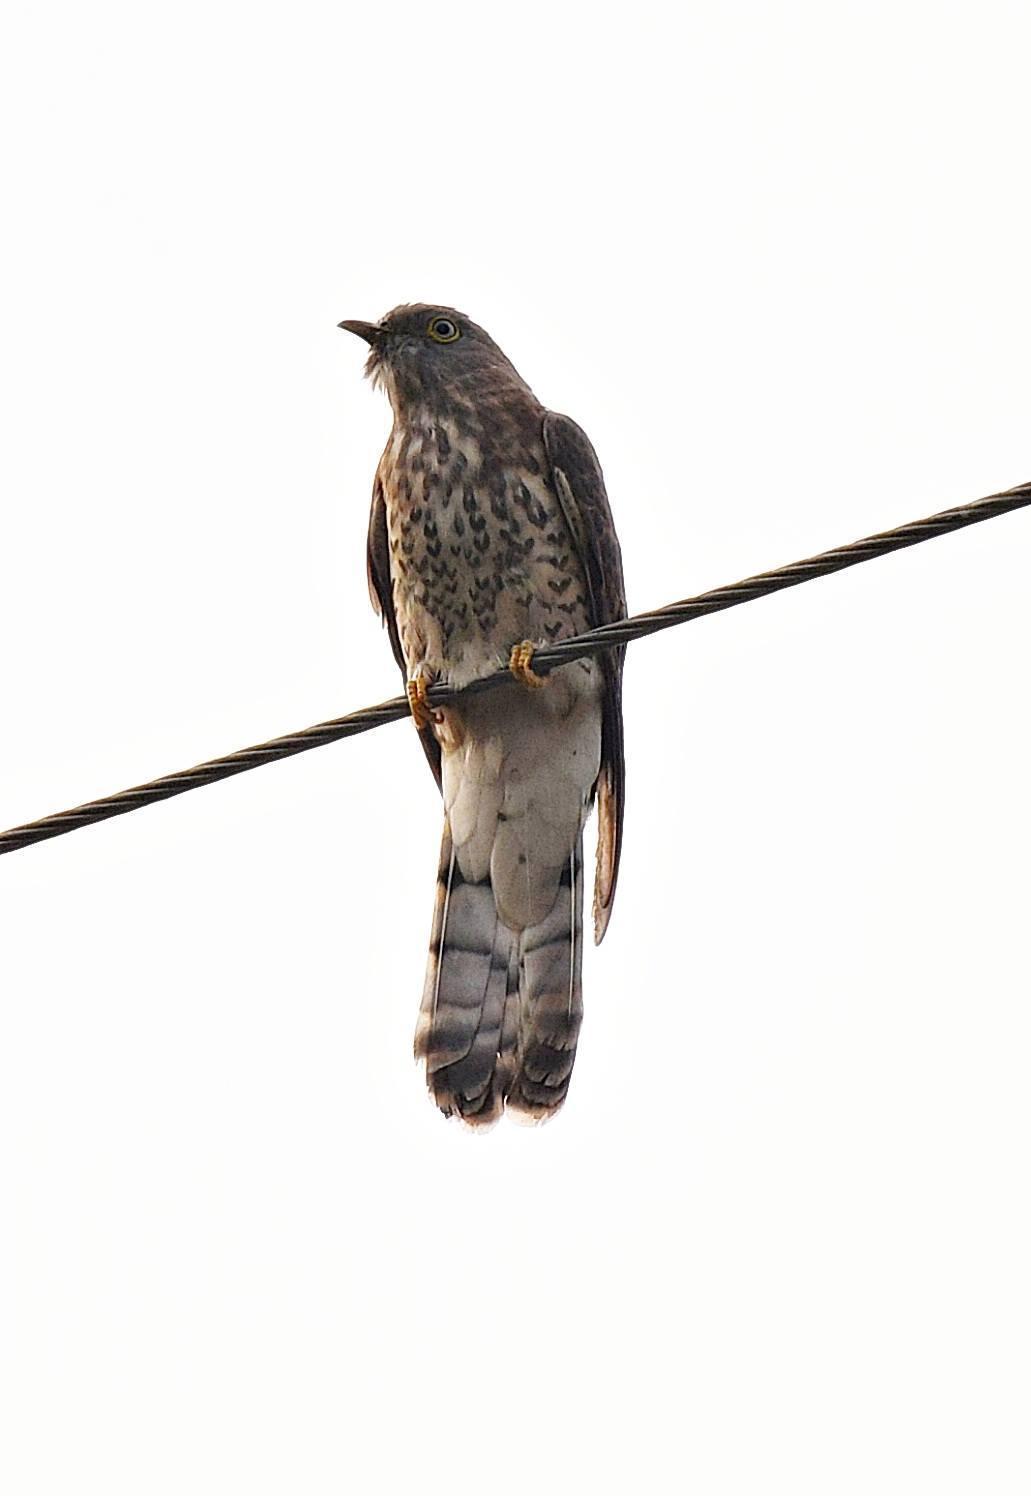 Common Hawk-Cuckoo Photo by indu gupta